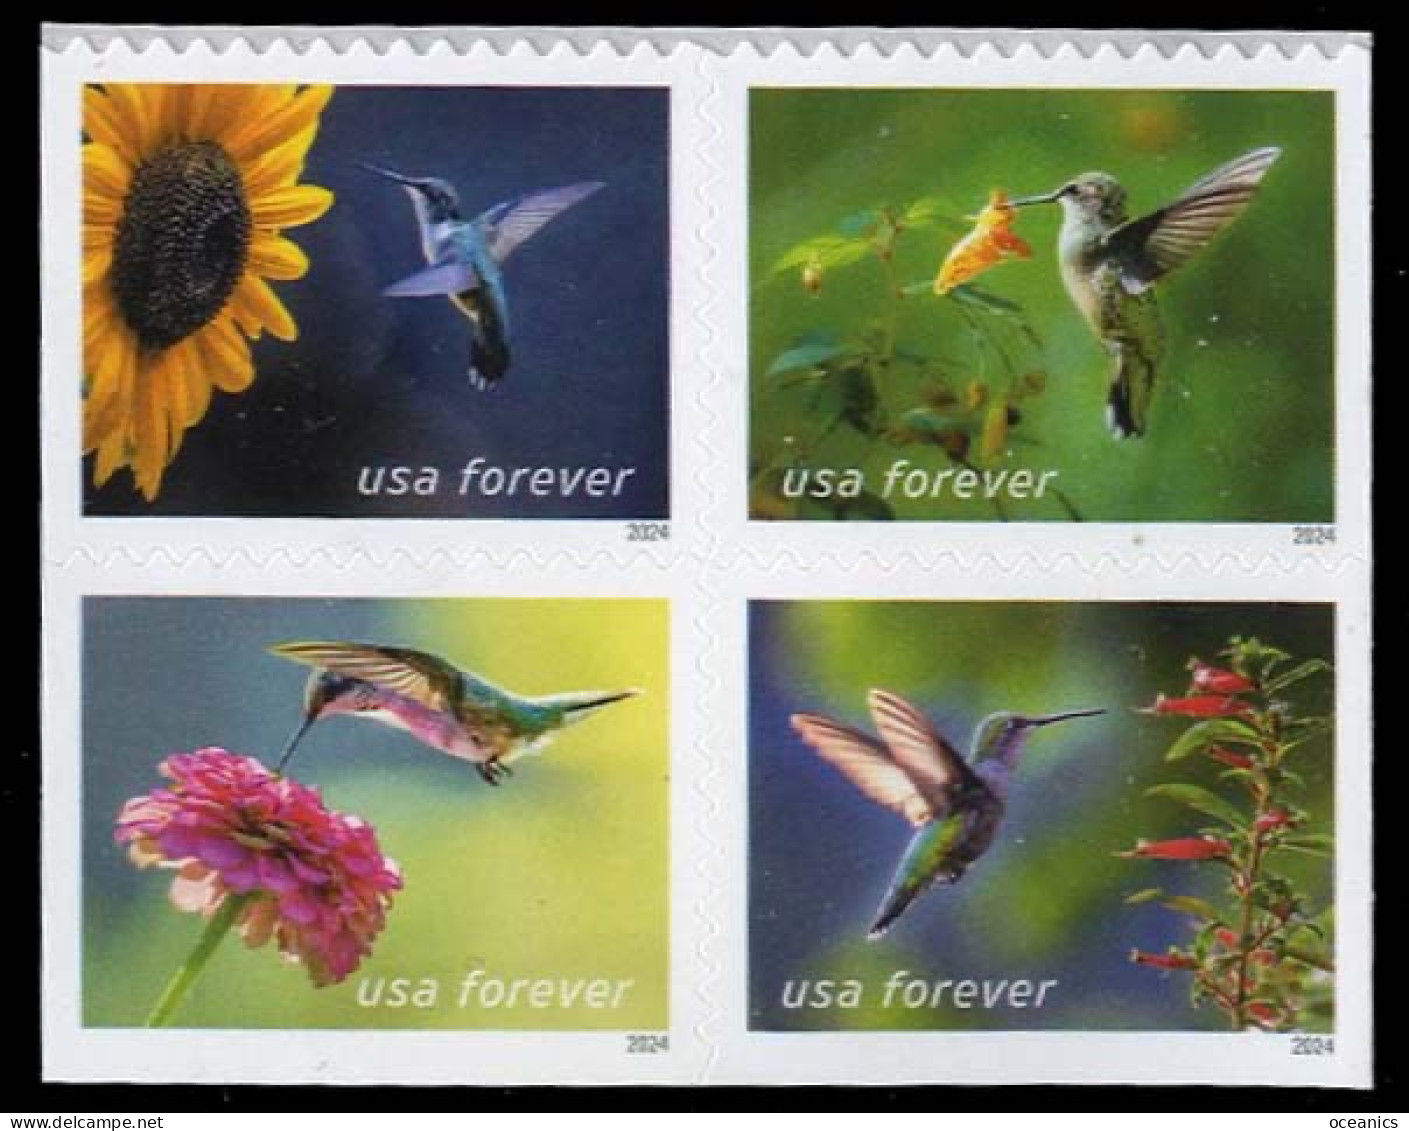 Etats-Unis / United States (Scott No.5848a - Garden Delights Forever Stamps) [**] Bloc Of 4 - Neufs